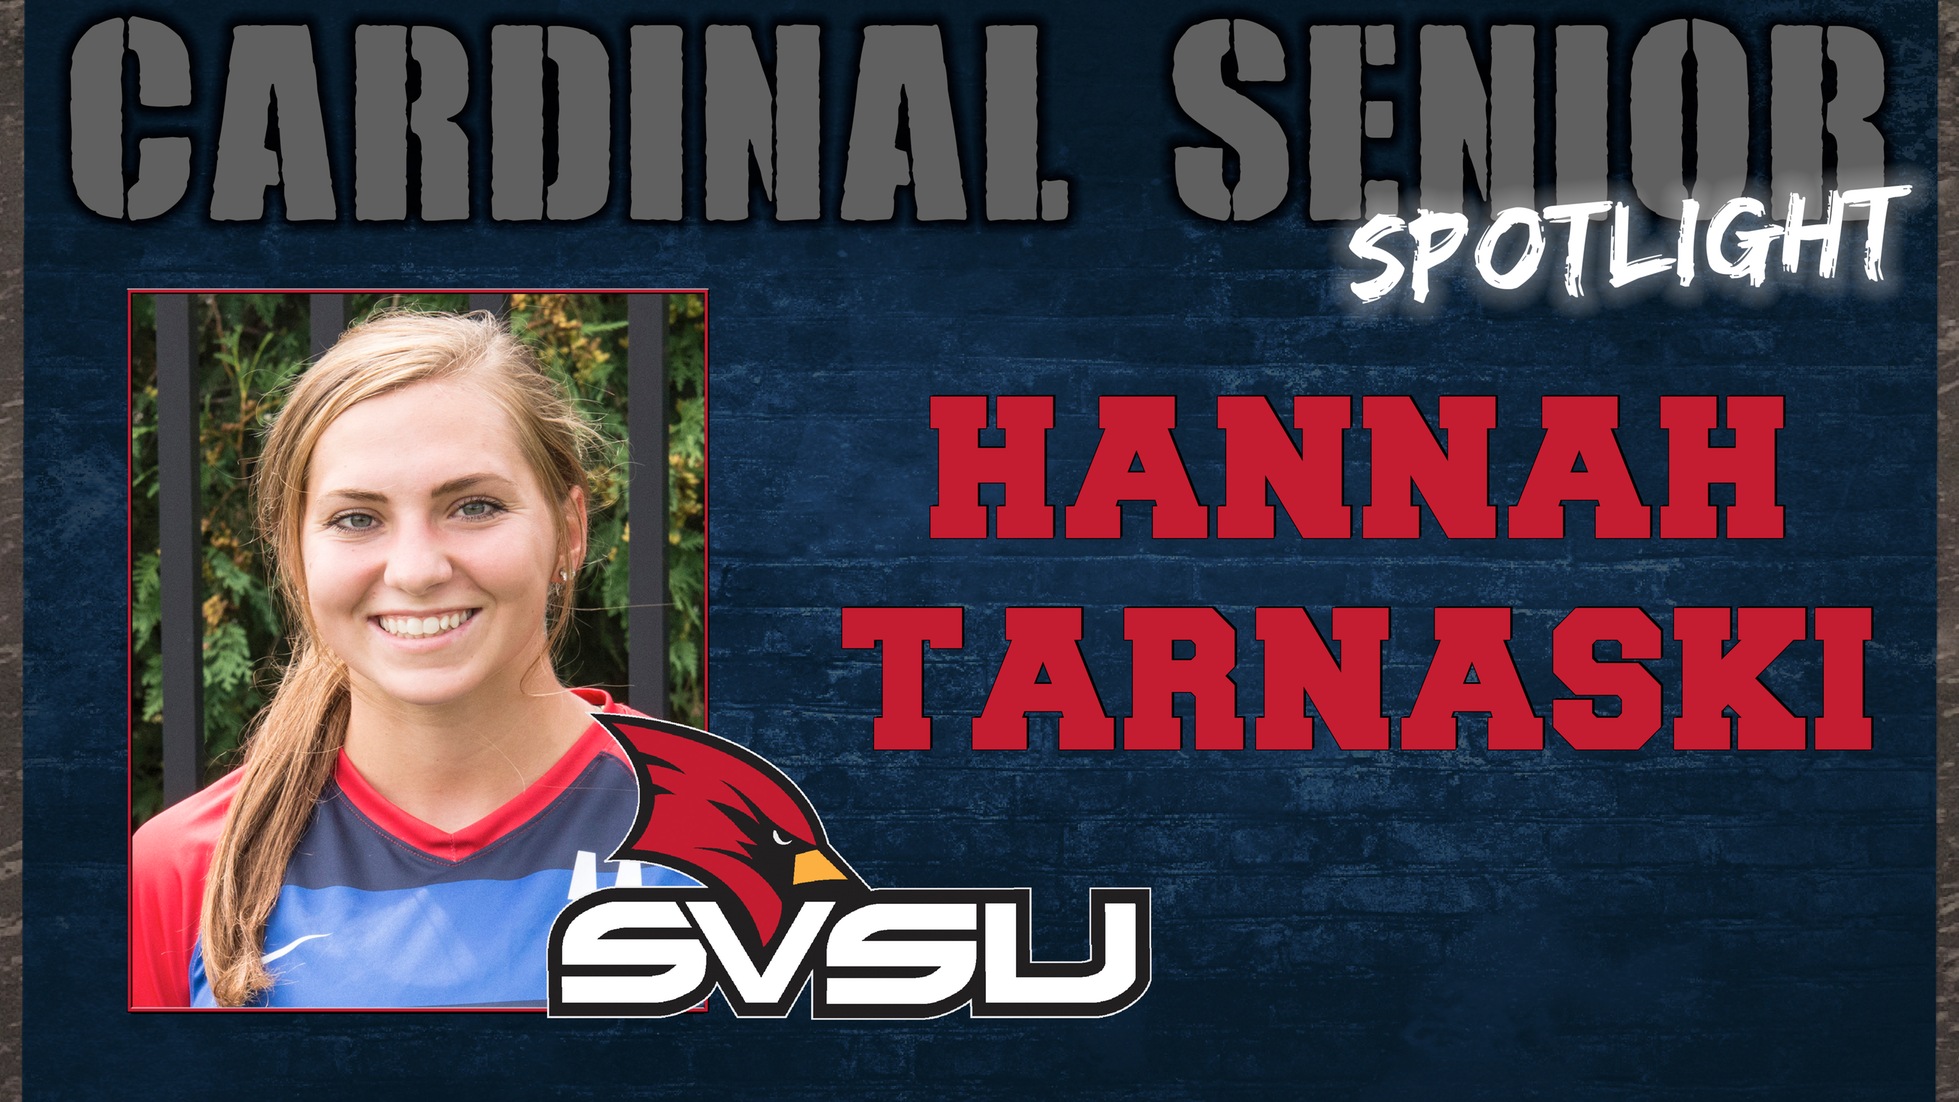 SVSU Cardinal Senior Spotlight - Hannah Tarnaski